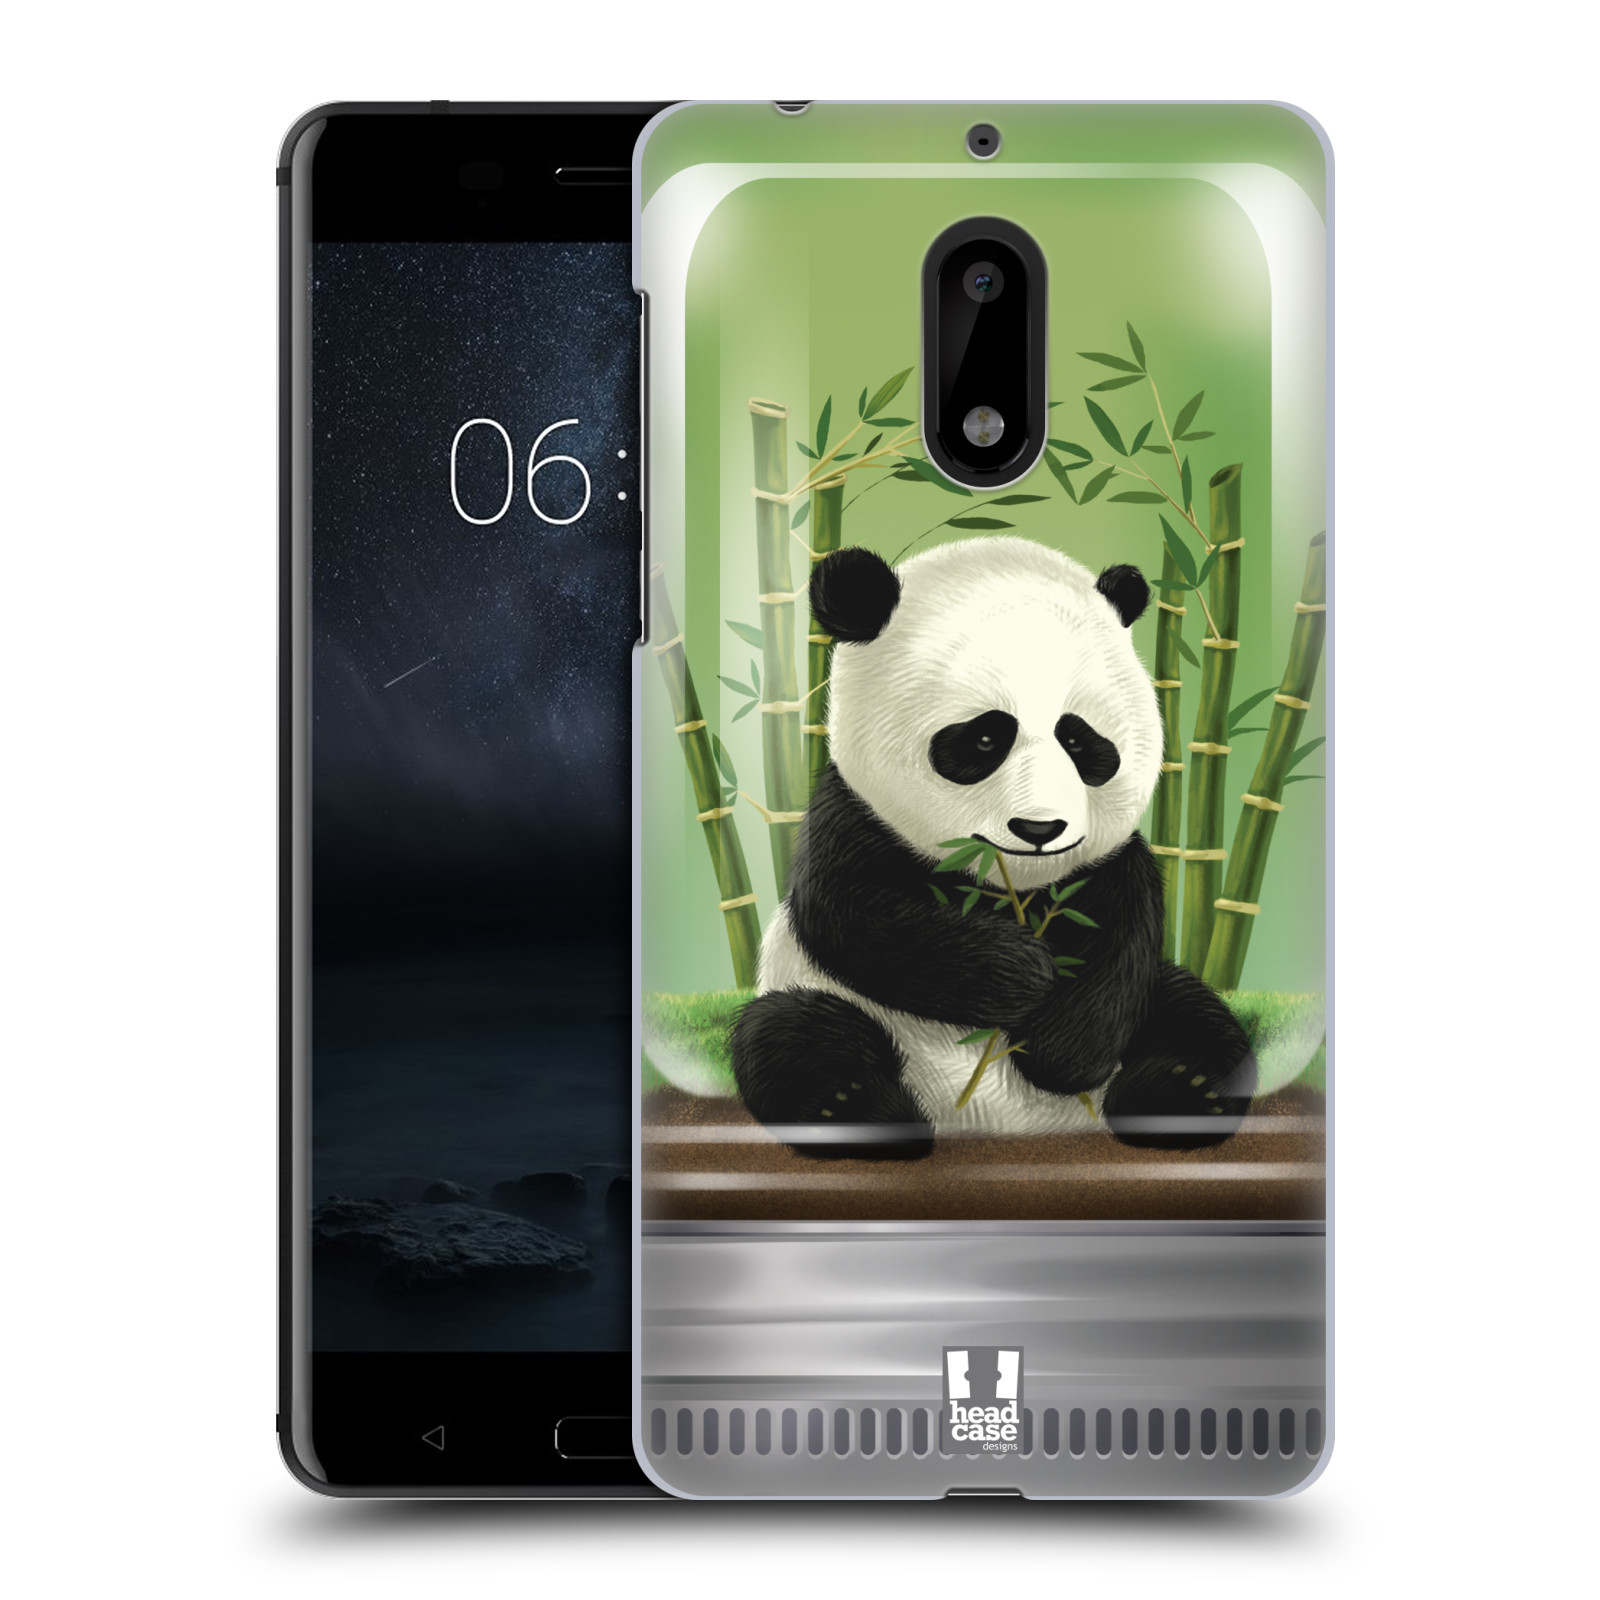 HEAD CASE plastový obal na mobil Nokia 6 vzor Zvířátka v těžítku panda